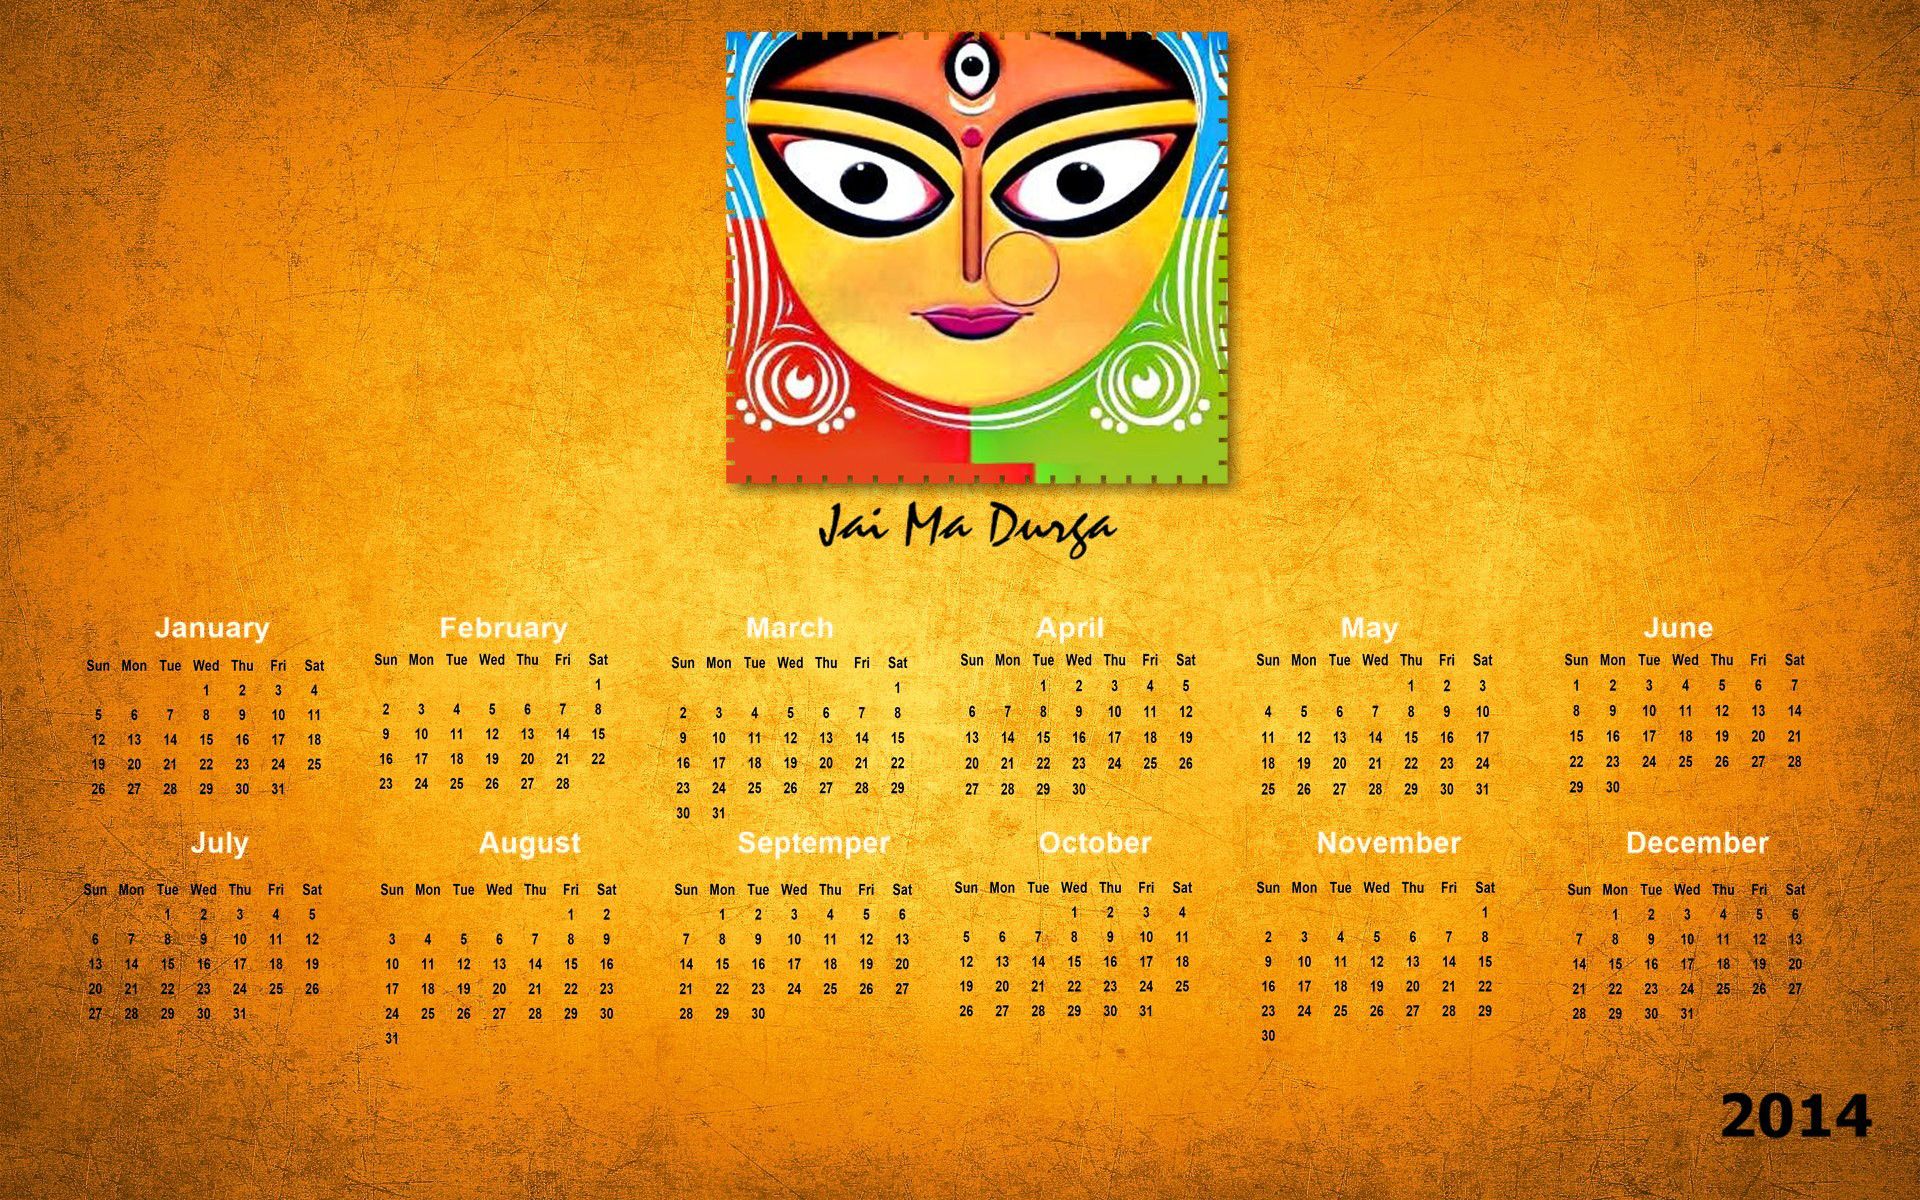 2014 Jai Maa Durga calendar hd wallpapers | Get Latest Wallpapers